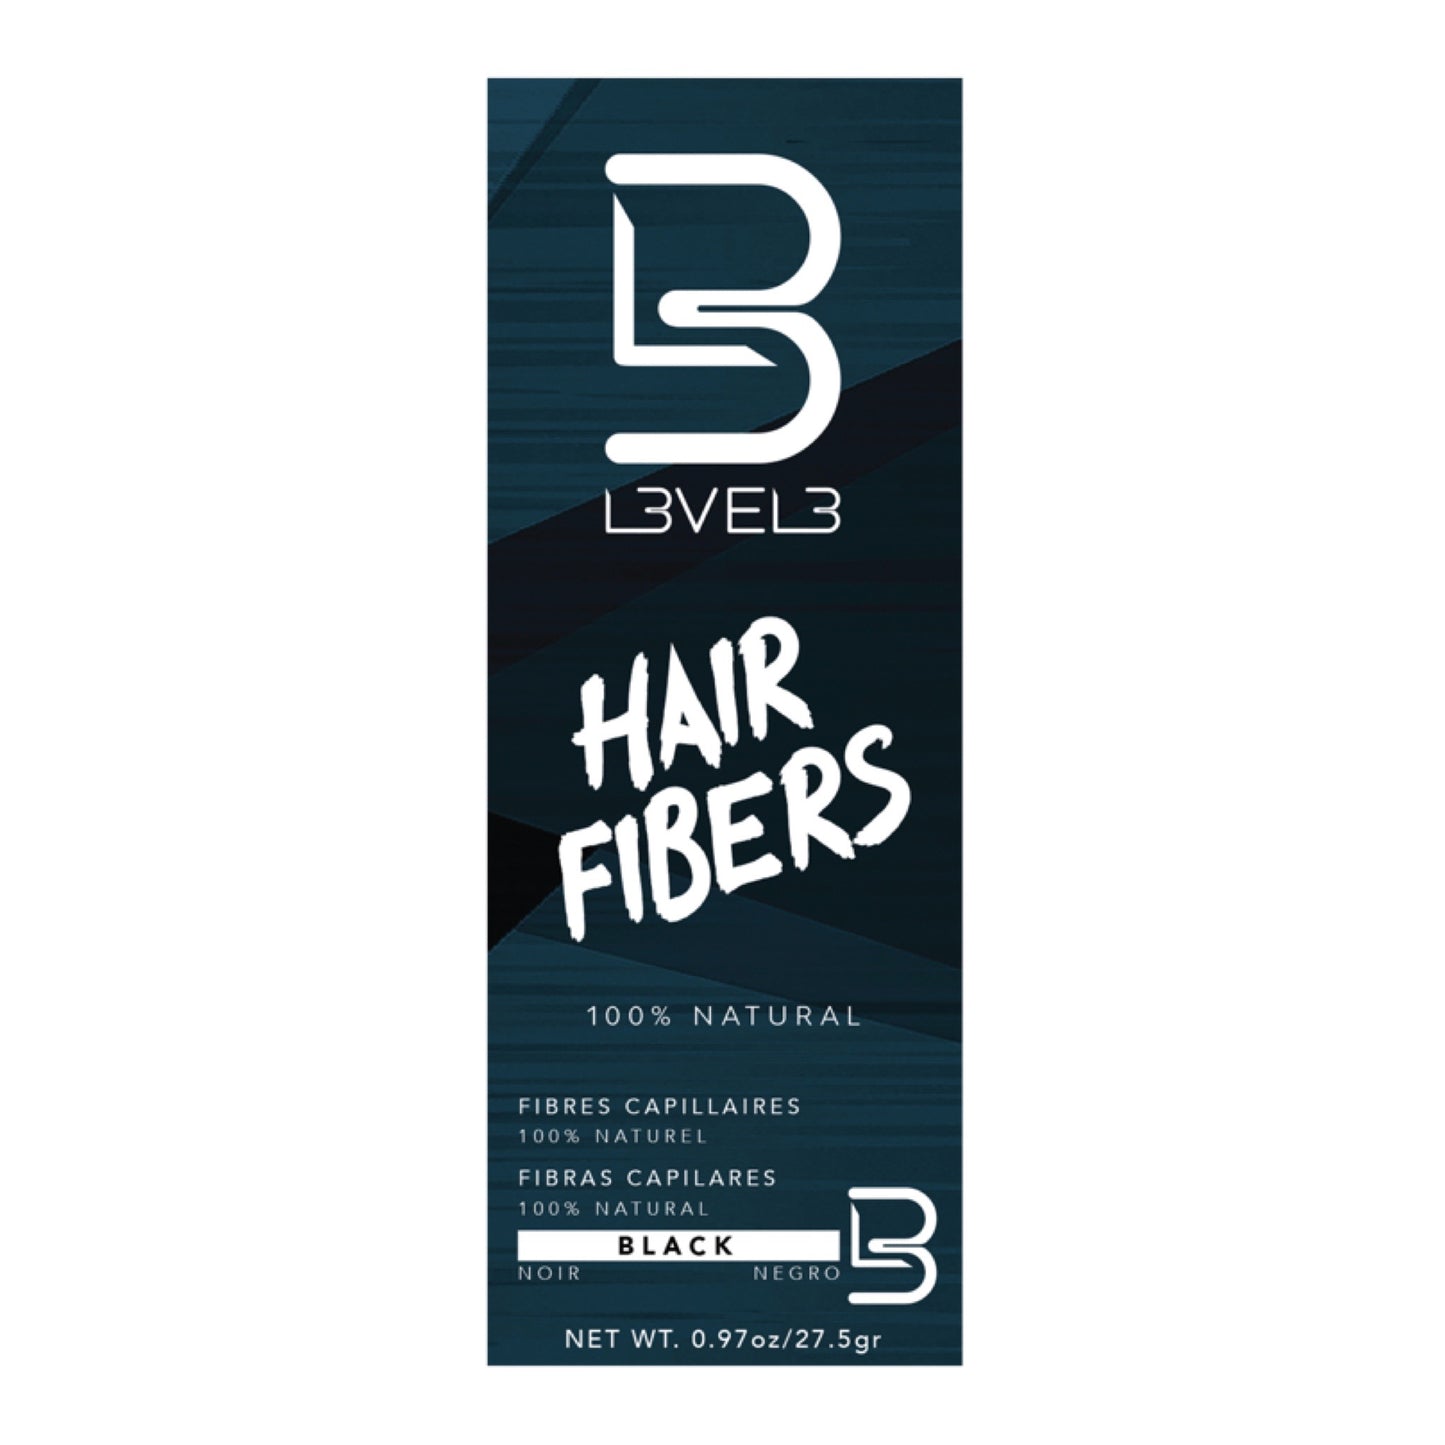 L3VEL3 Hair Fibers Black Box